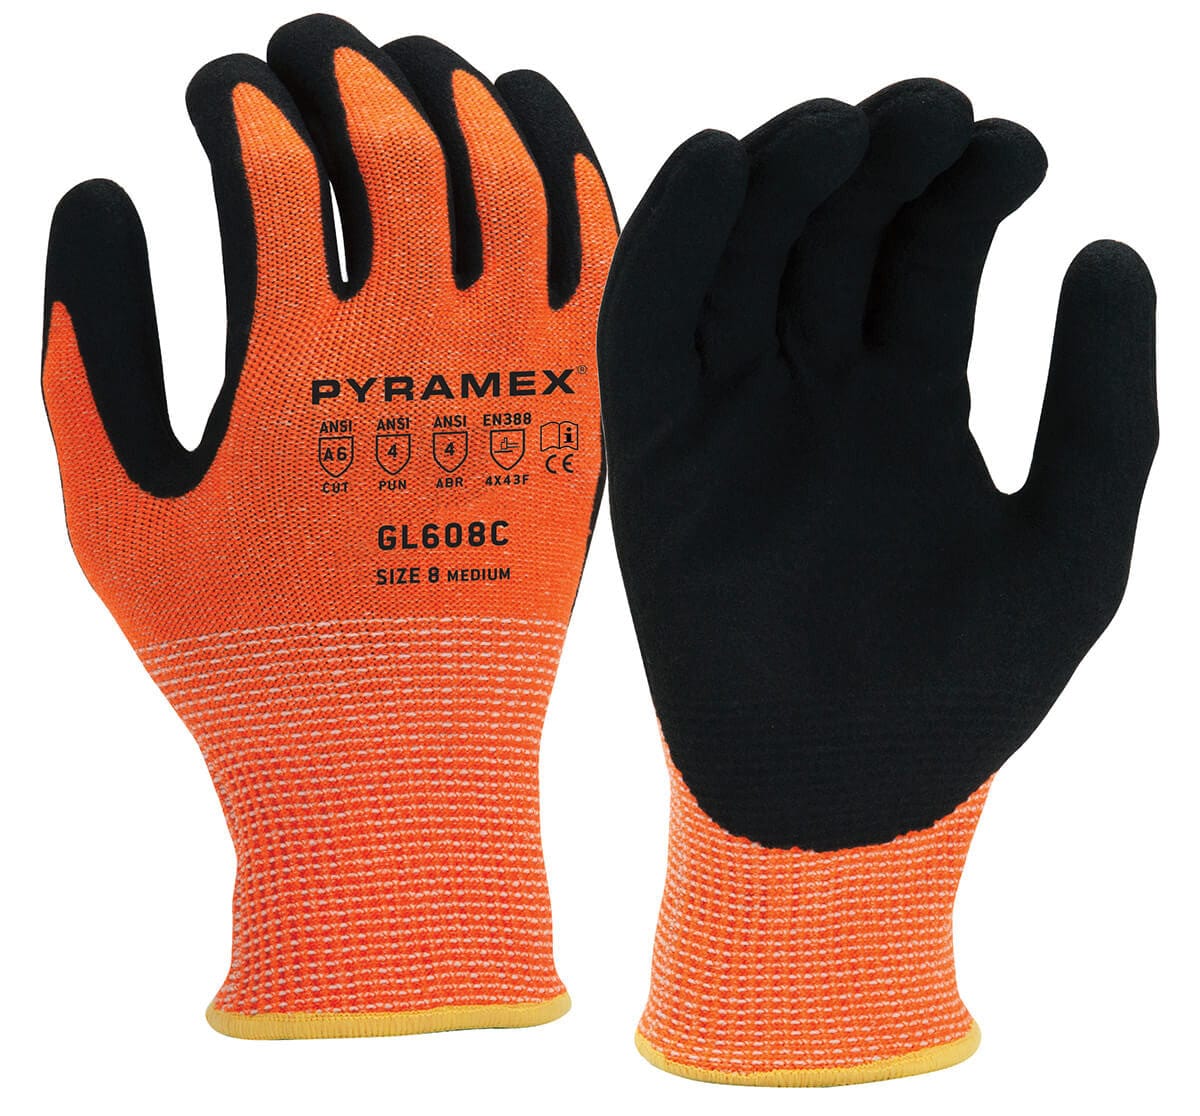 Pyramex GL608C Cut-Resistant A6 Sandy Nitrile Dipped Gloves